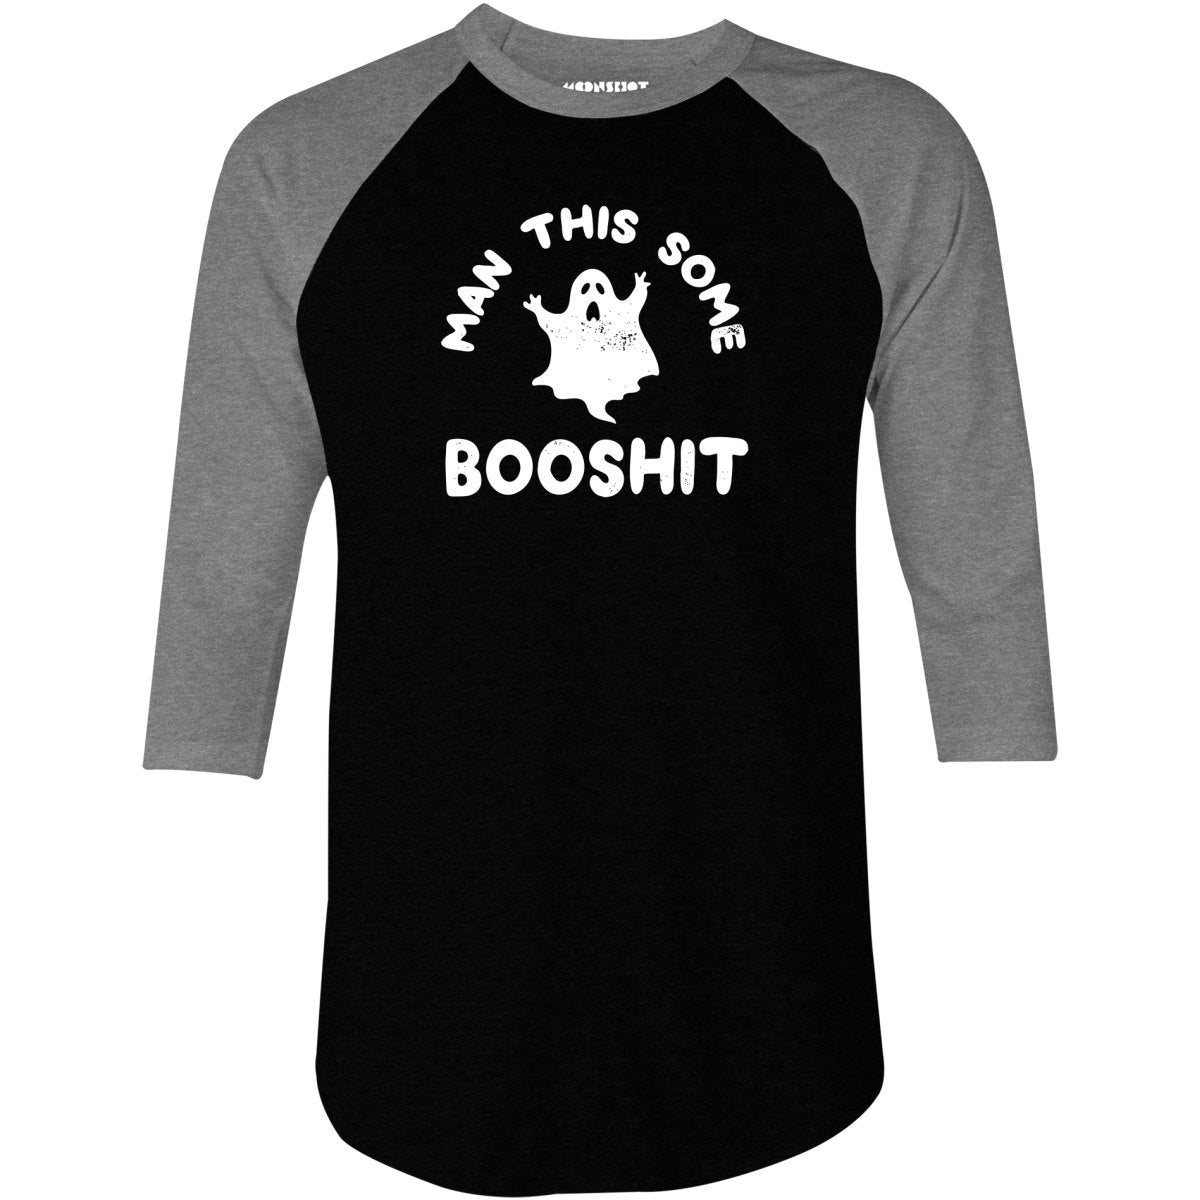 Man This Some Booshit - 3/4 Sleeve Raglan T-Shirt